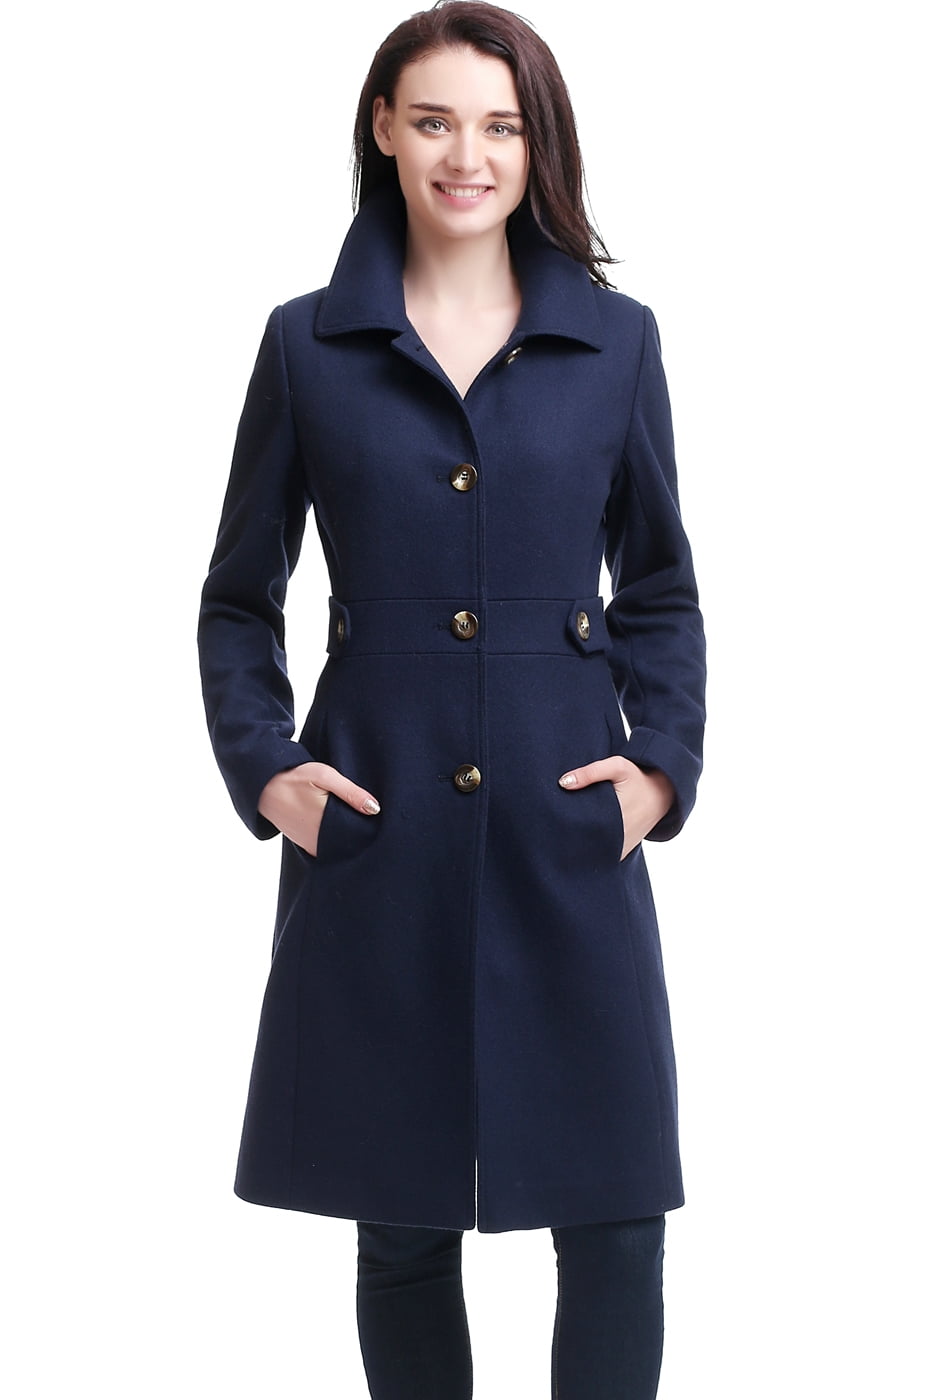 BGSD Womens Heather Wool Blend Walking Coat (Regular & Plus Size ...